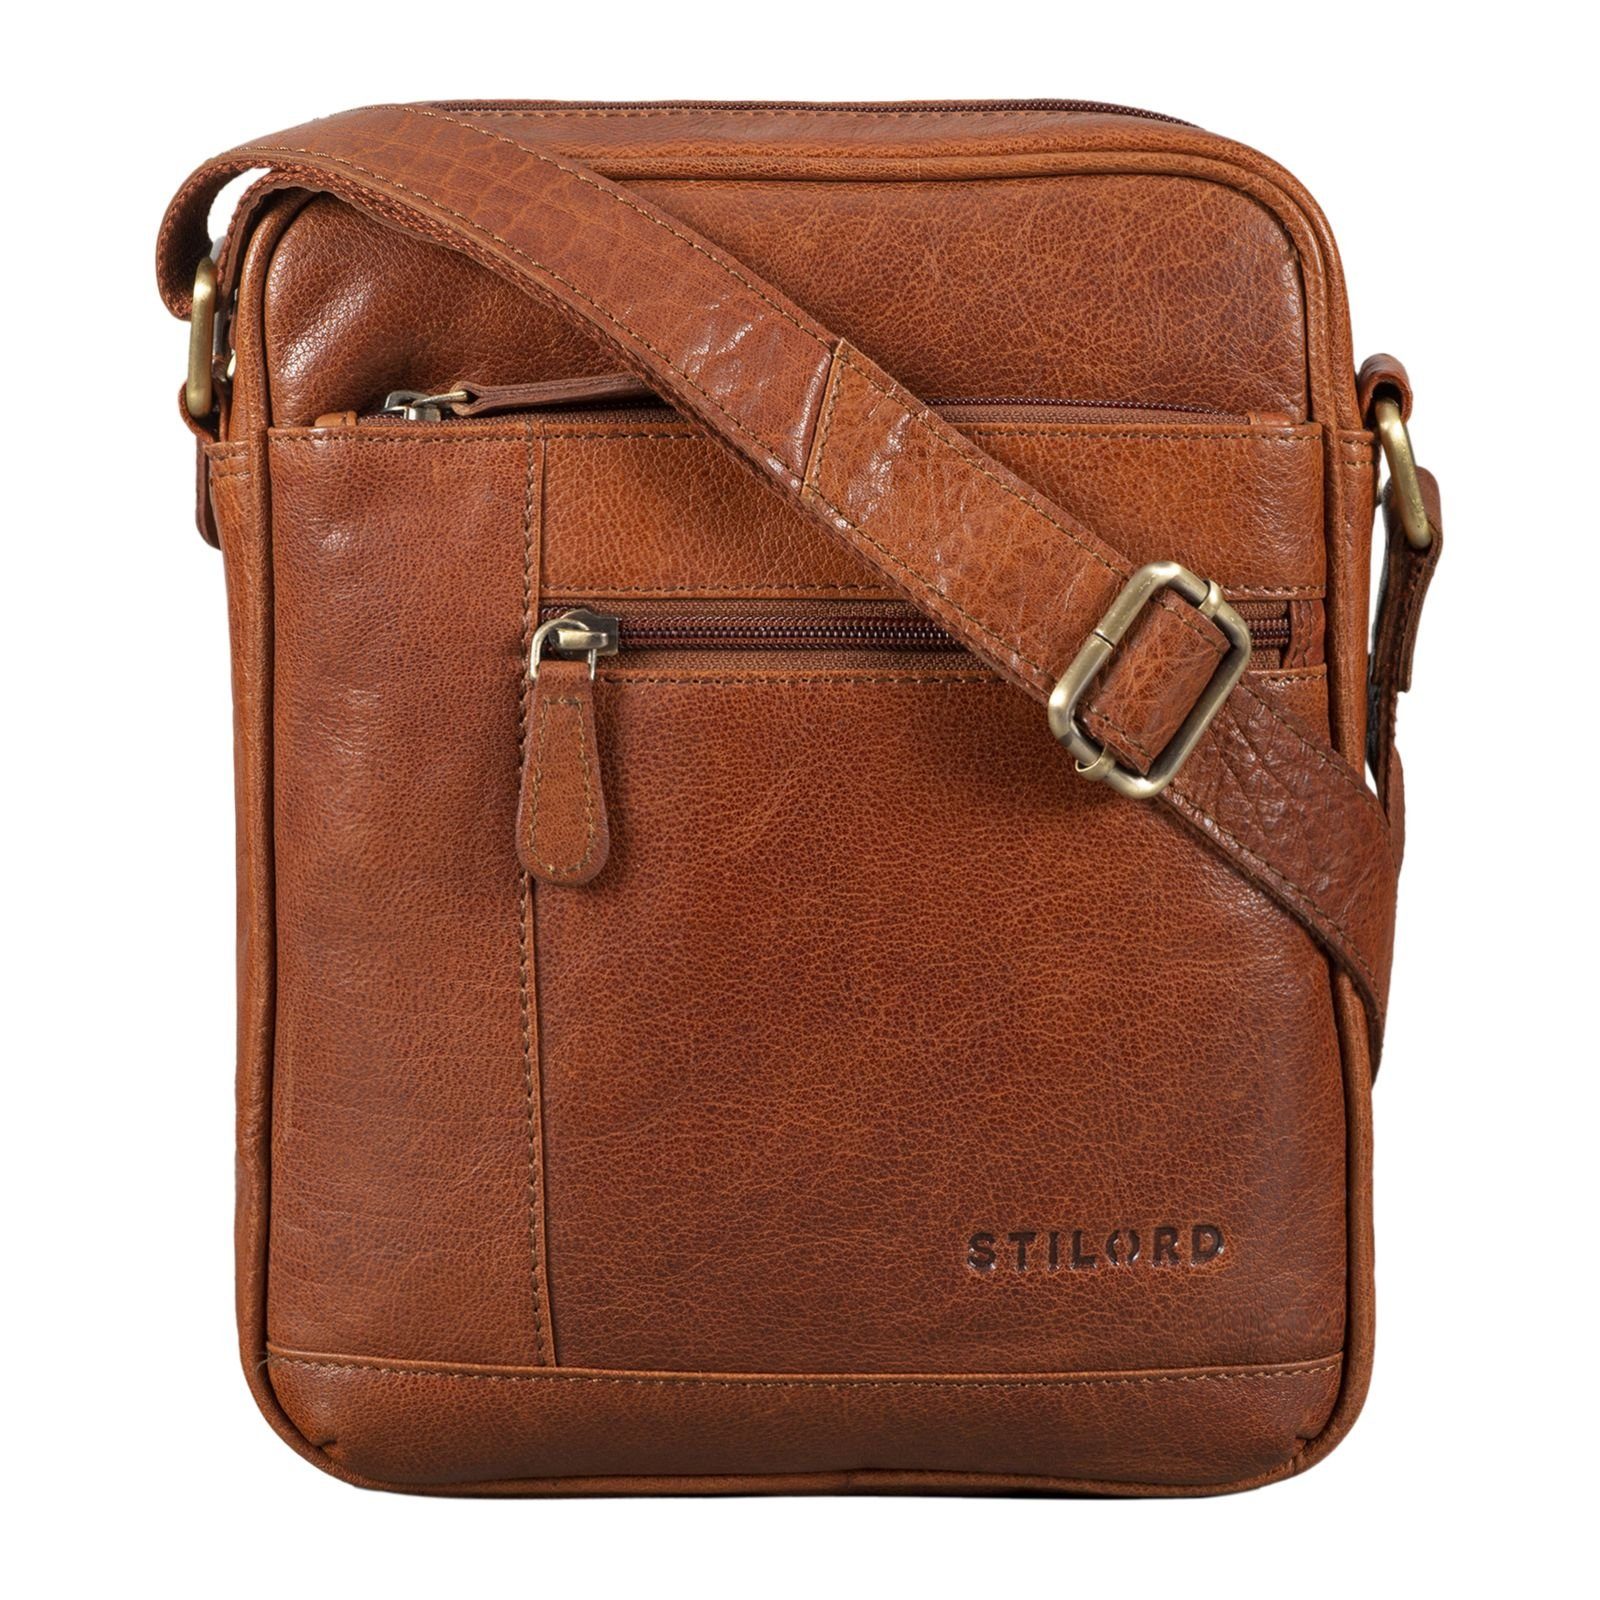 STILORD Messenger Bag maraska "Diego" Vintage Herrentasche Leder braun - klein